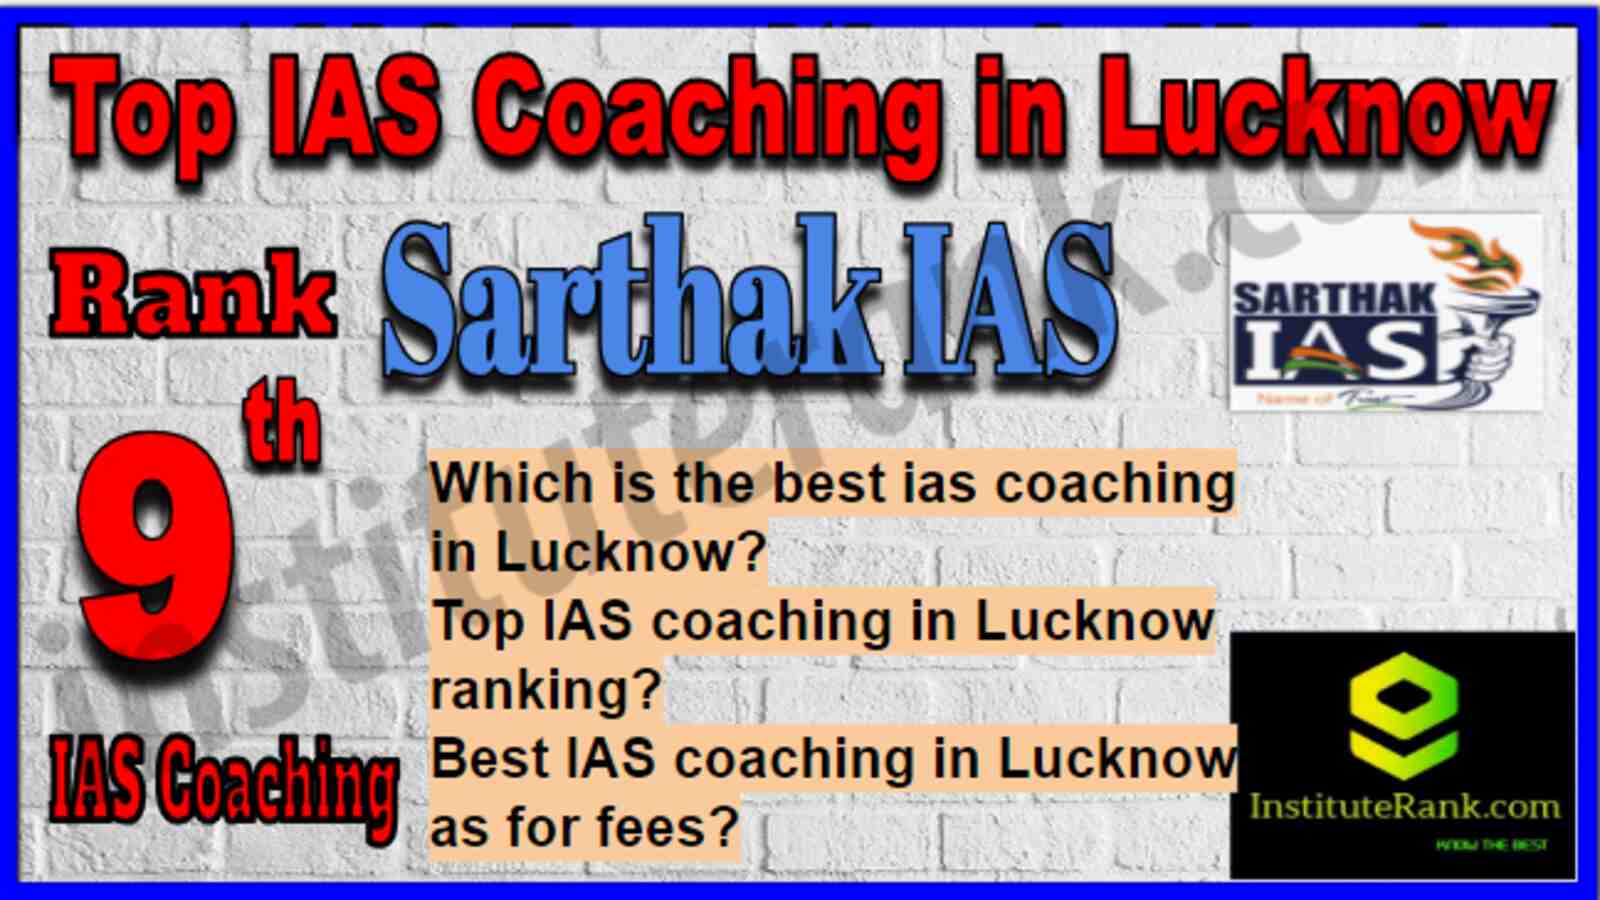 Rank 9 Top IAS Coaching in Lucknow